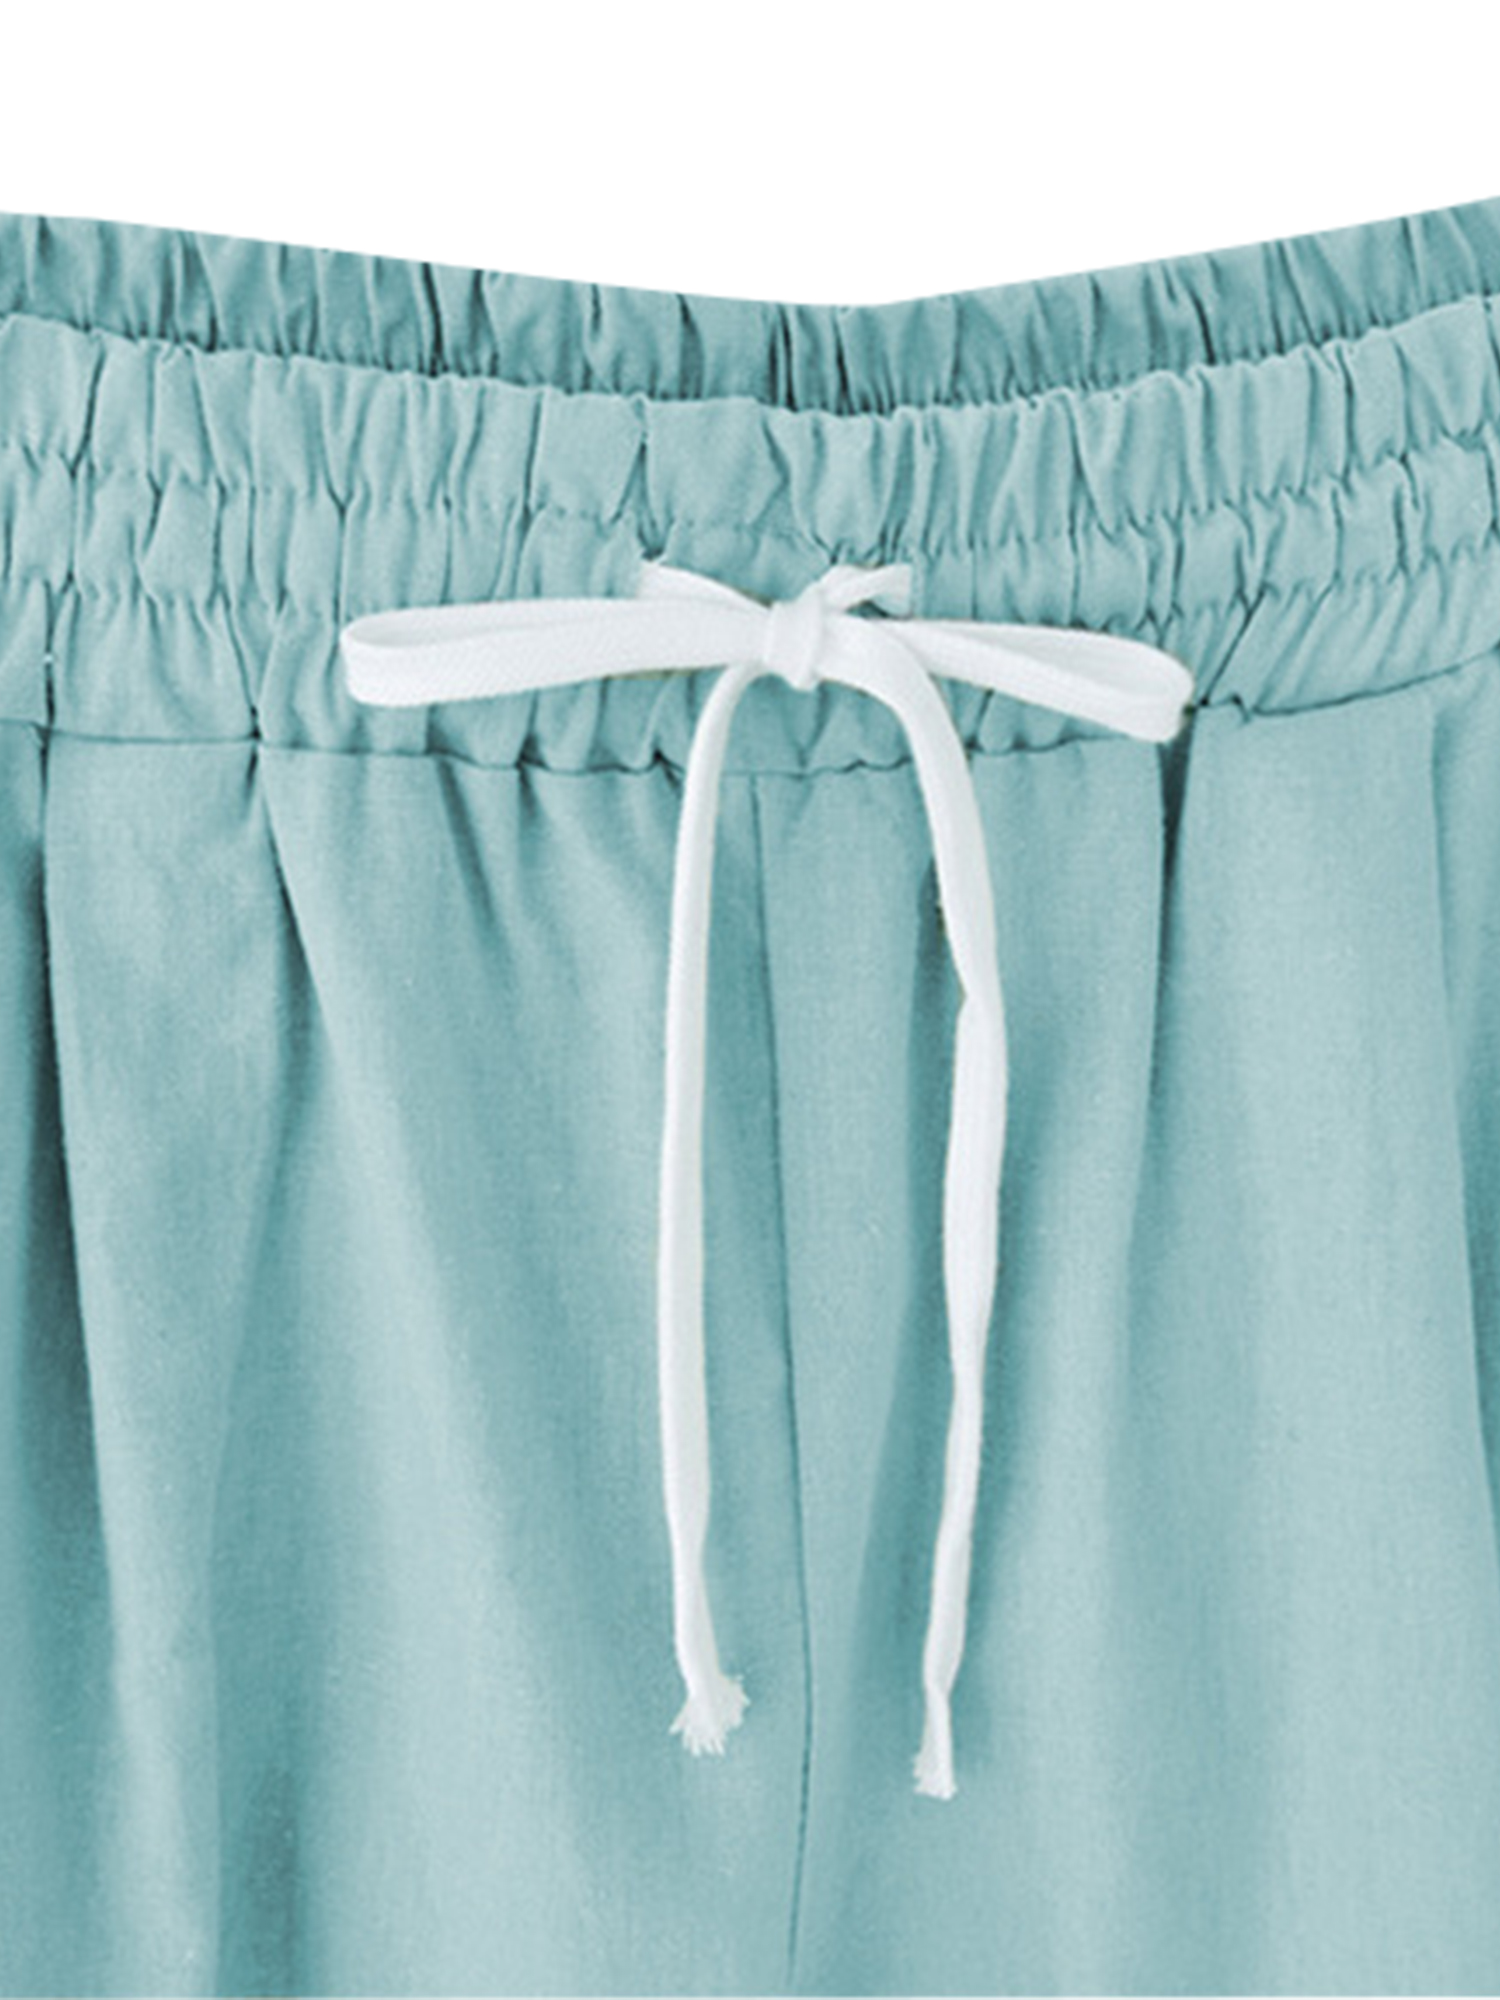 Niuer Women Summer Shorts Casual Lounge Wear Short Hot Pants Ladies Bermuda Shorts Ladies High Waist Beach Knee Length Pockets Short Trousers - image 3 of 5